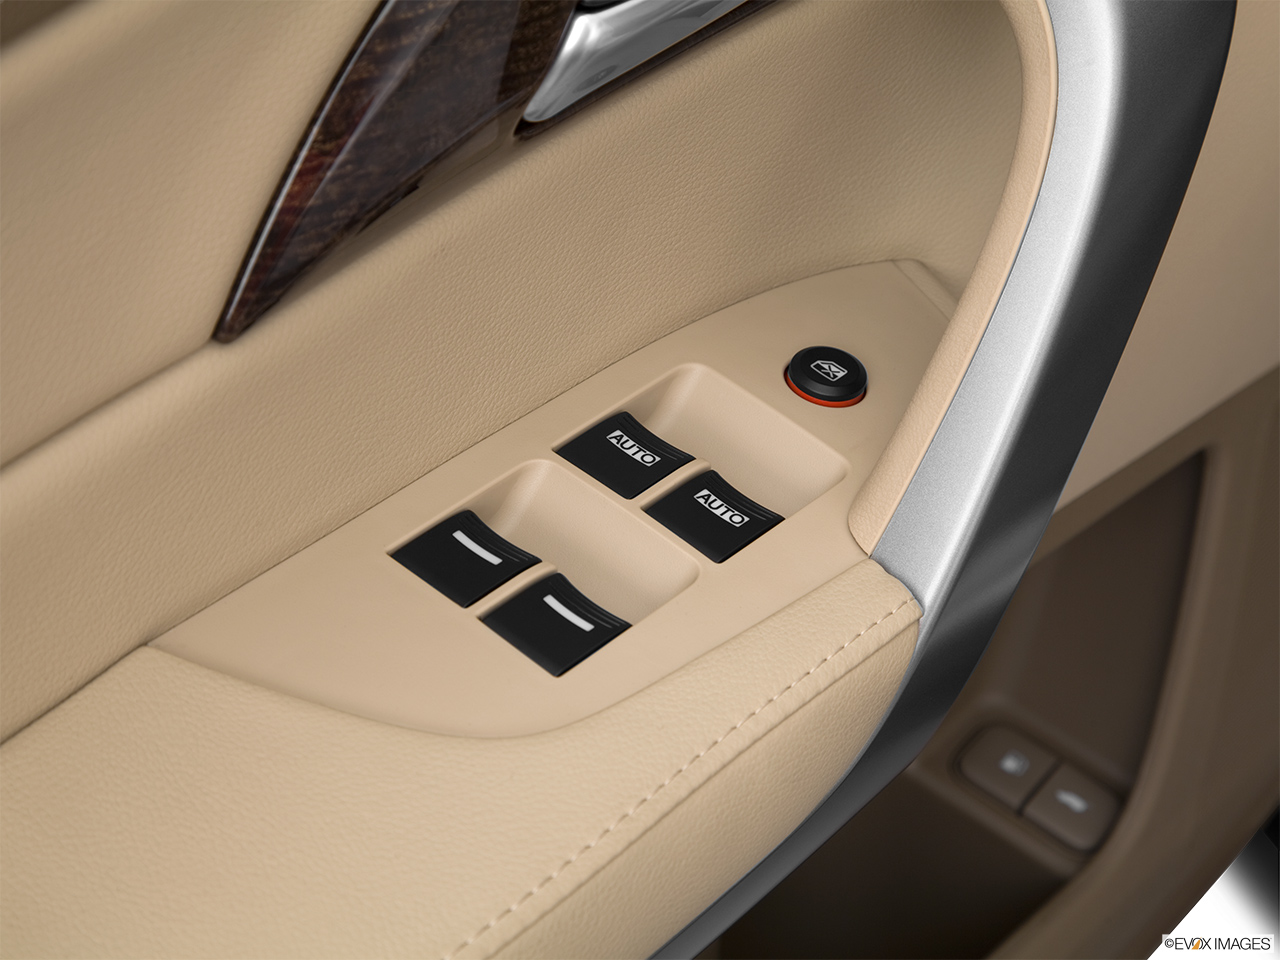 2012 Acura MDX MDX Driver's side inside window controls. 